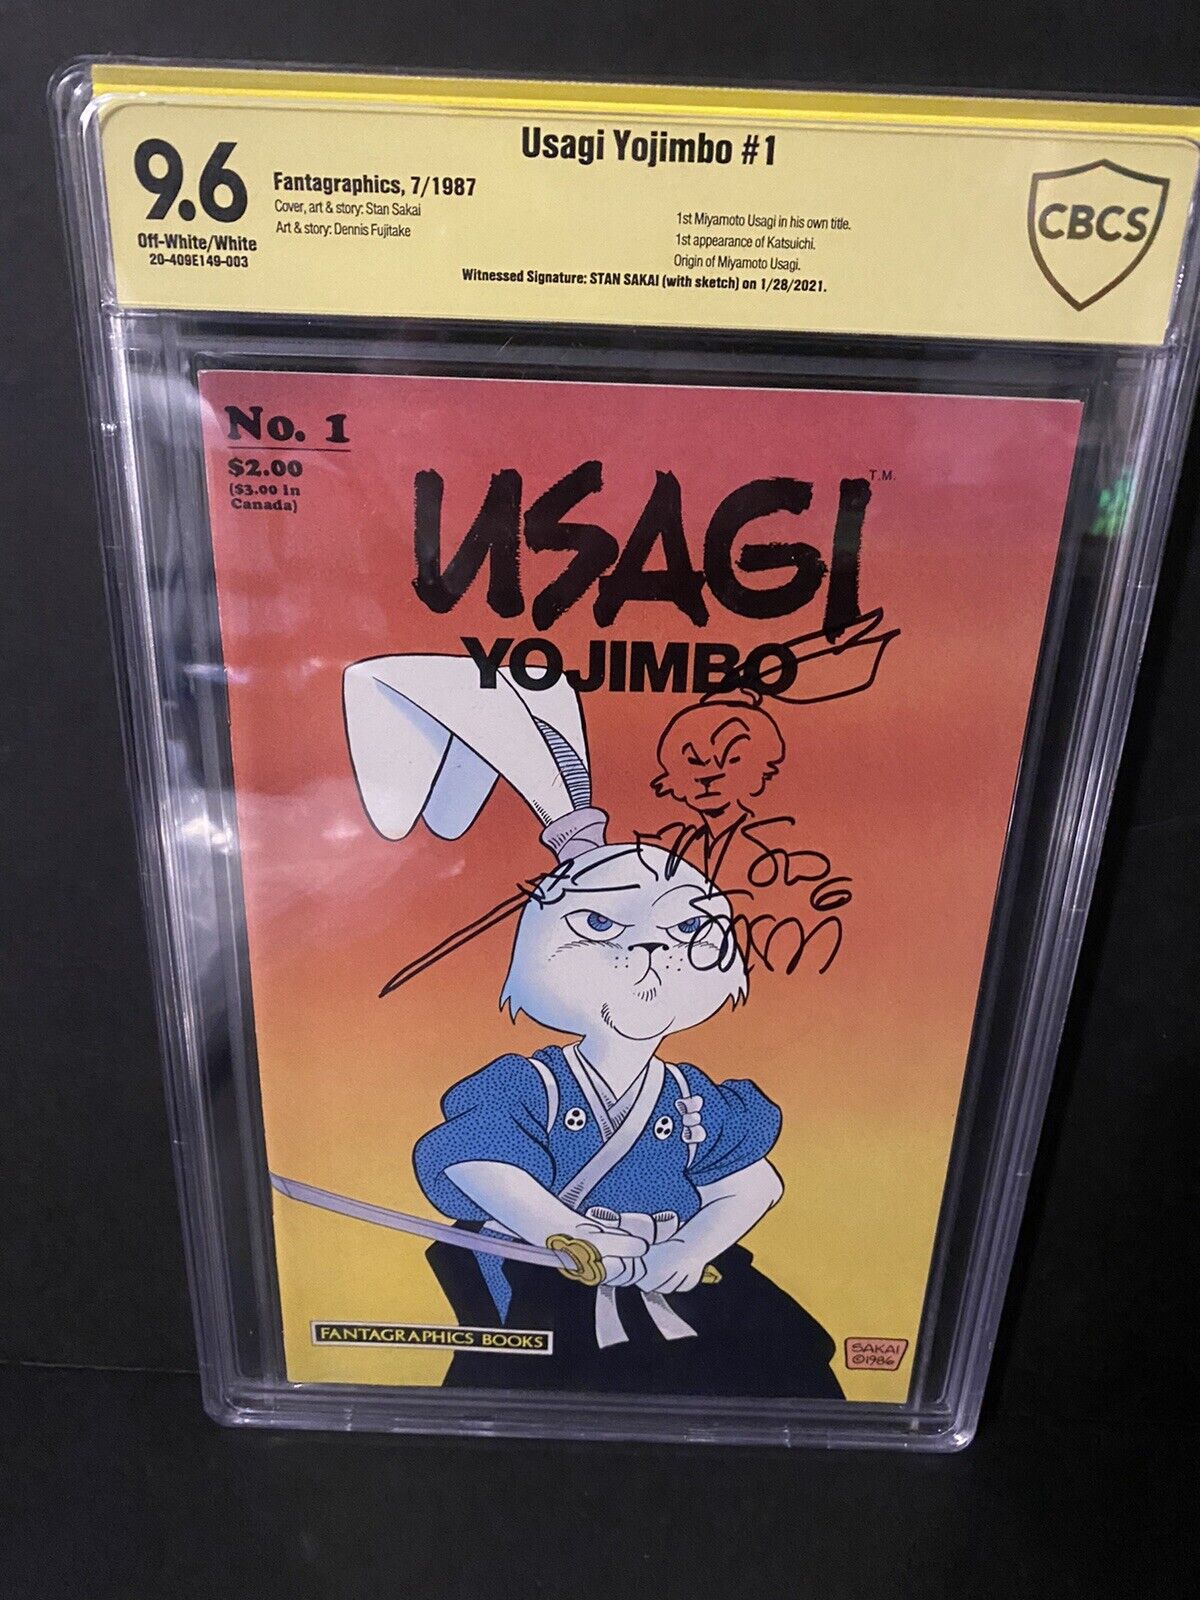 Usagi Yojimbo #1 1987 1st Print CBCS 9.6 Stan Sakai Signature and Sketch 1st App